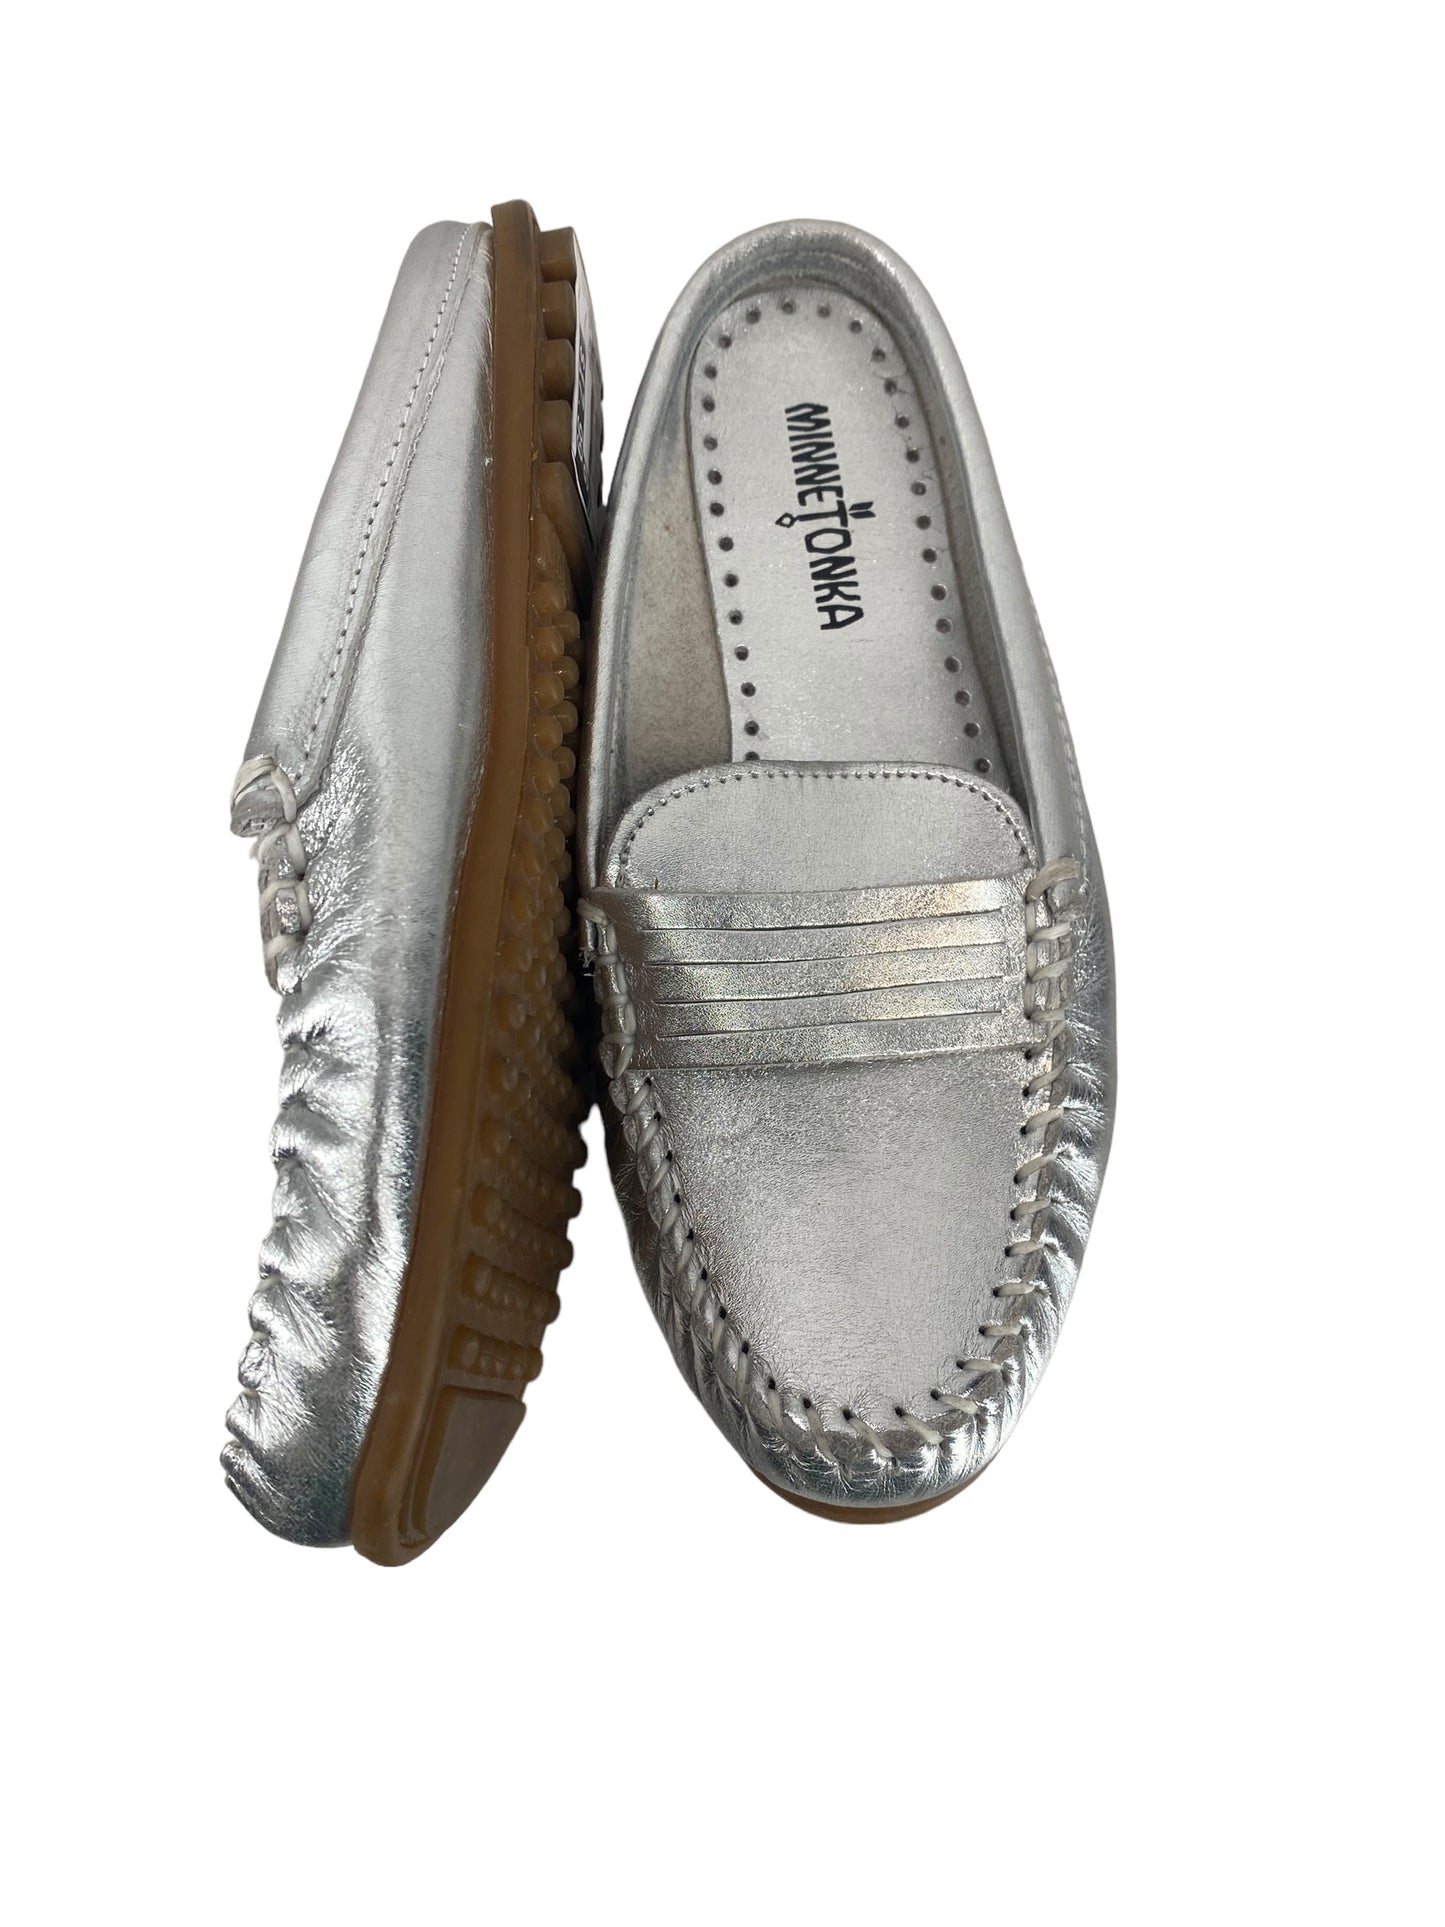 Silver Shoes Flats Minnetonka, Size 9